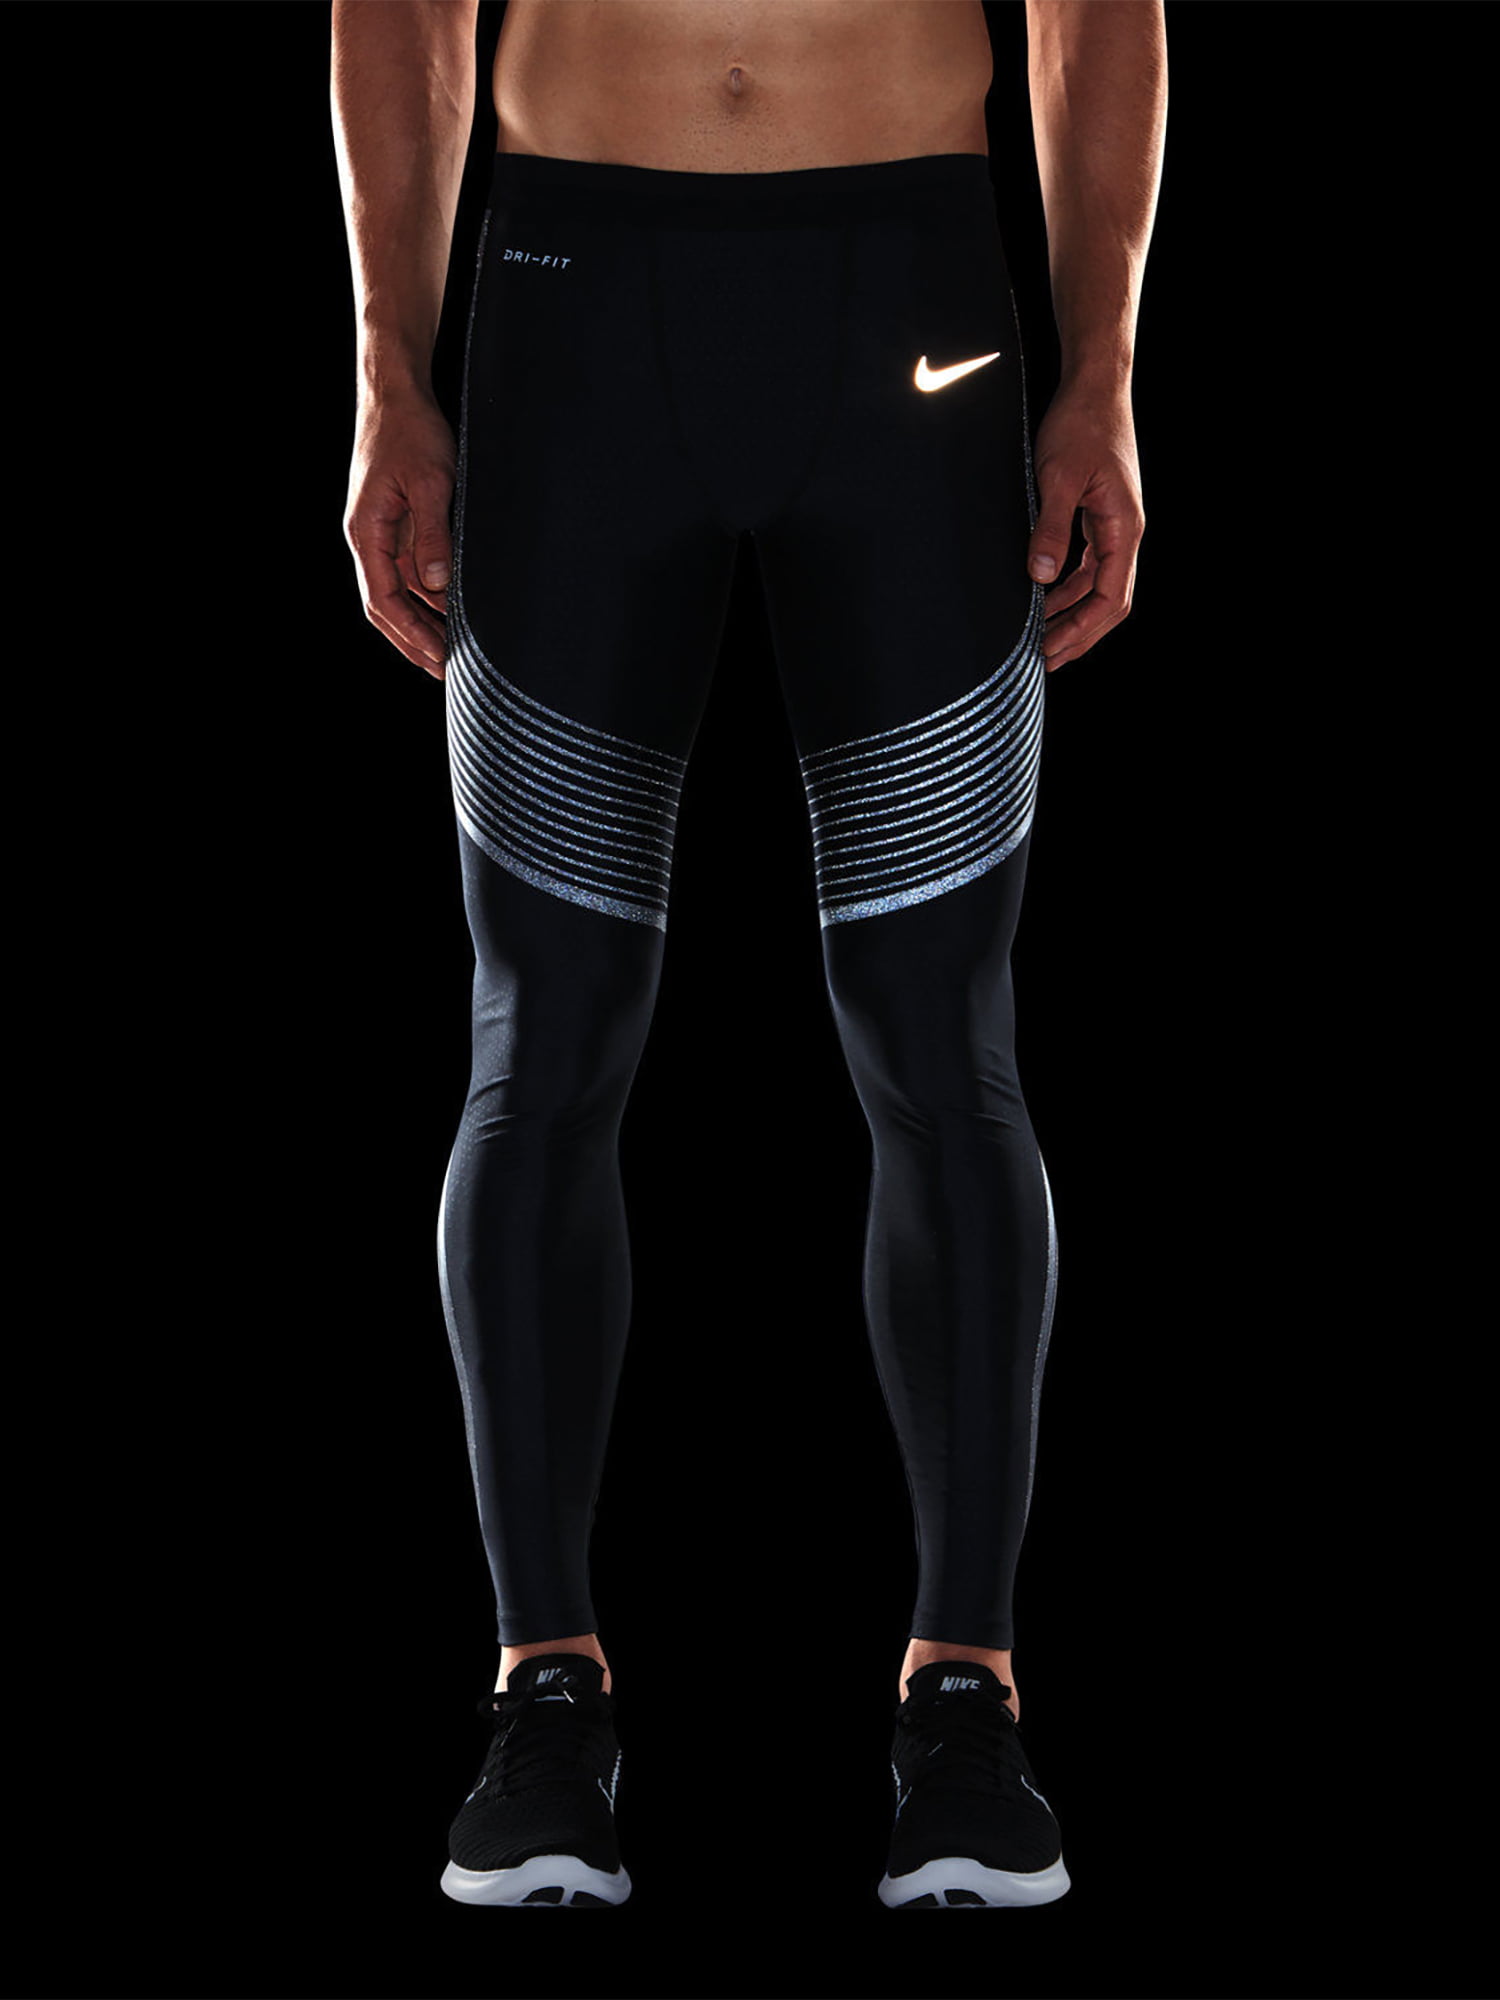 Nike Power Speed Flash Men's Running Tights, Black/Reflective